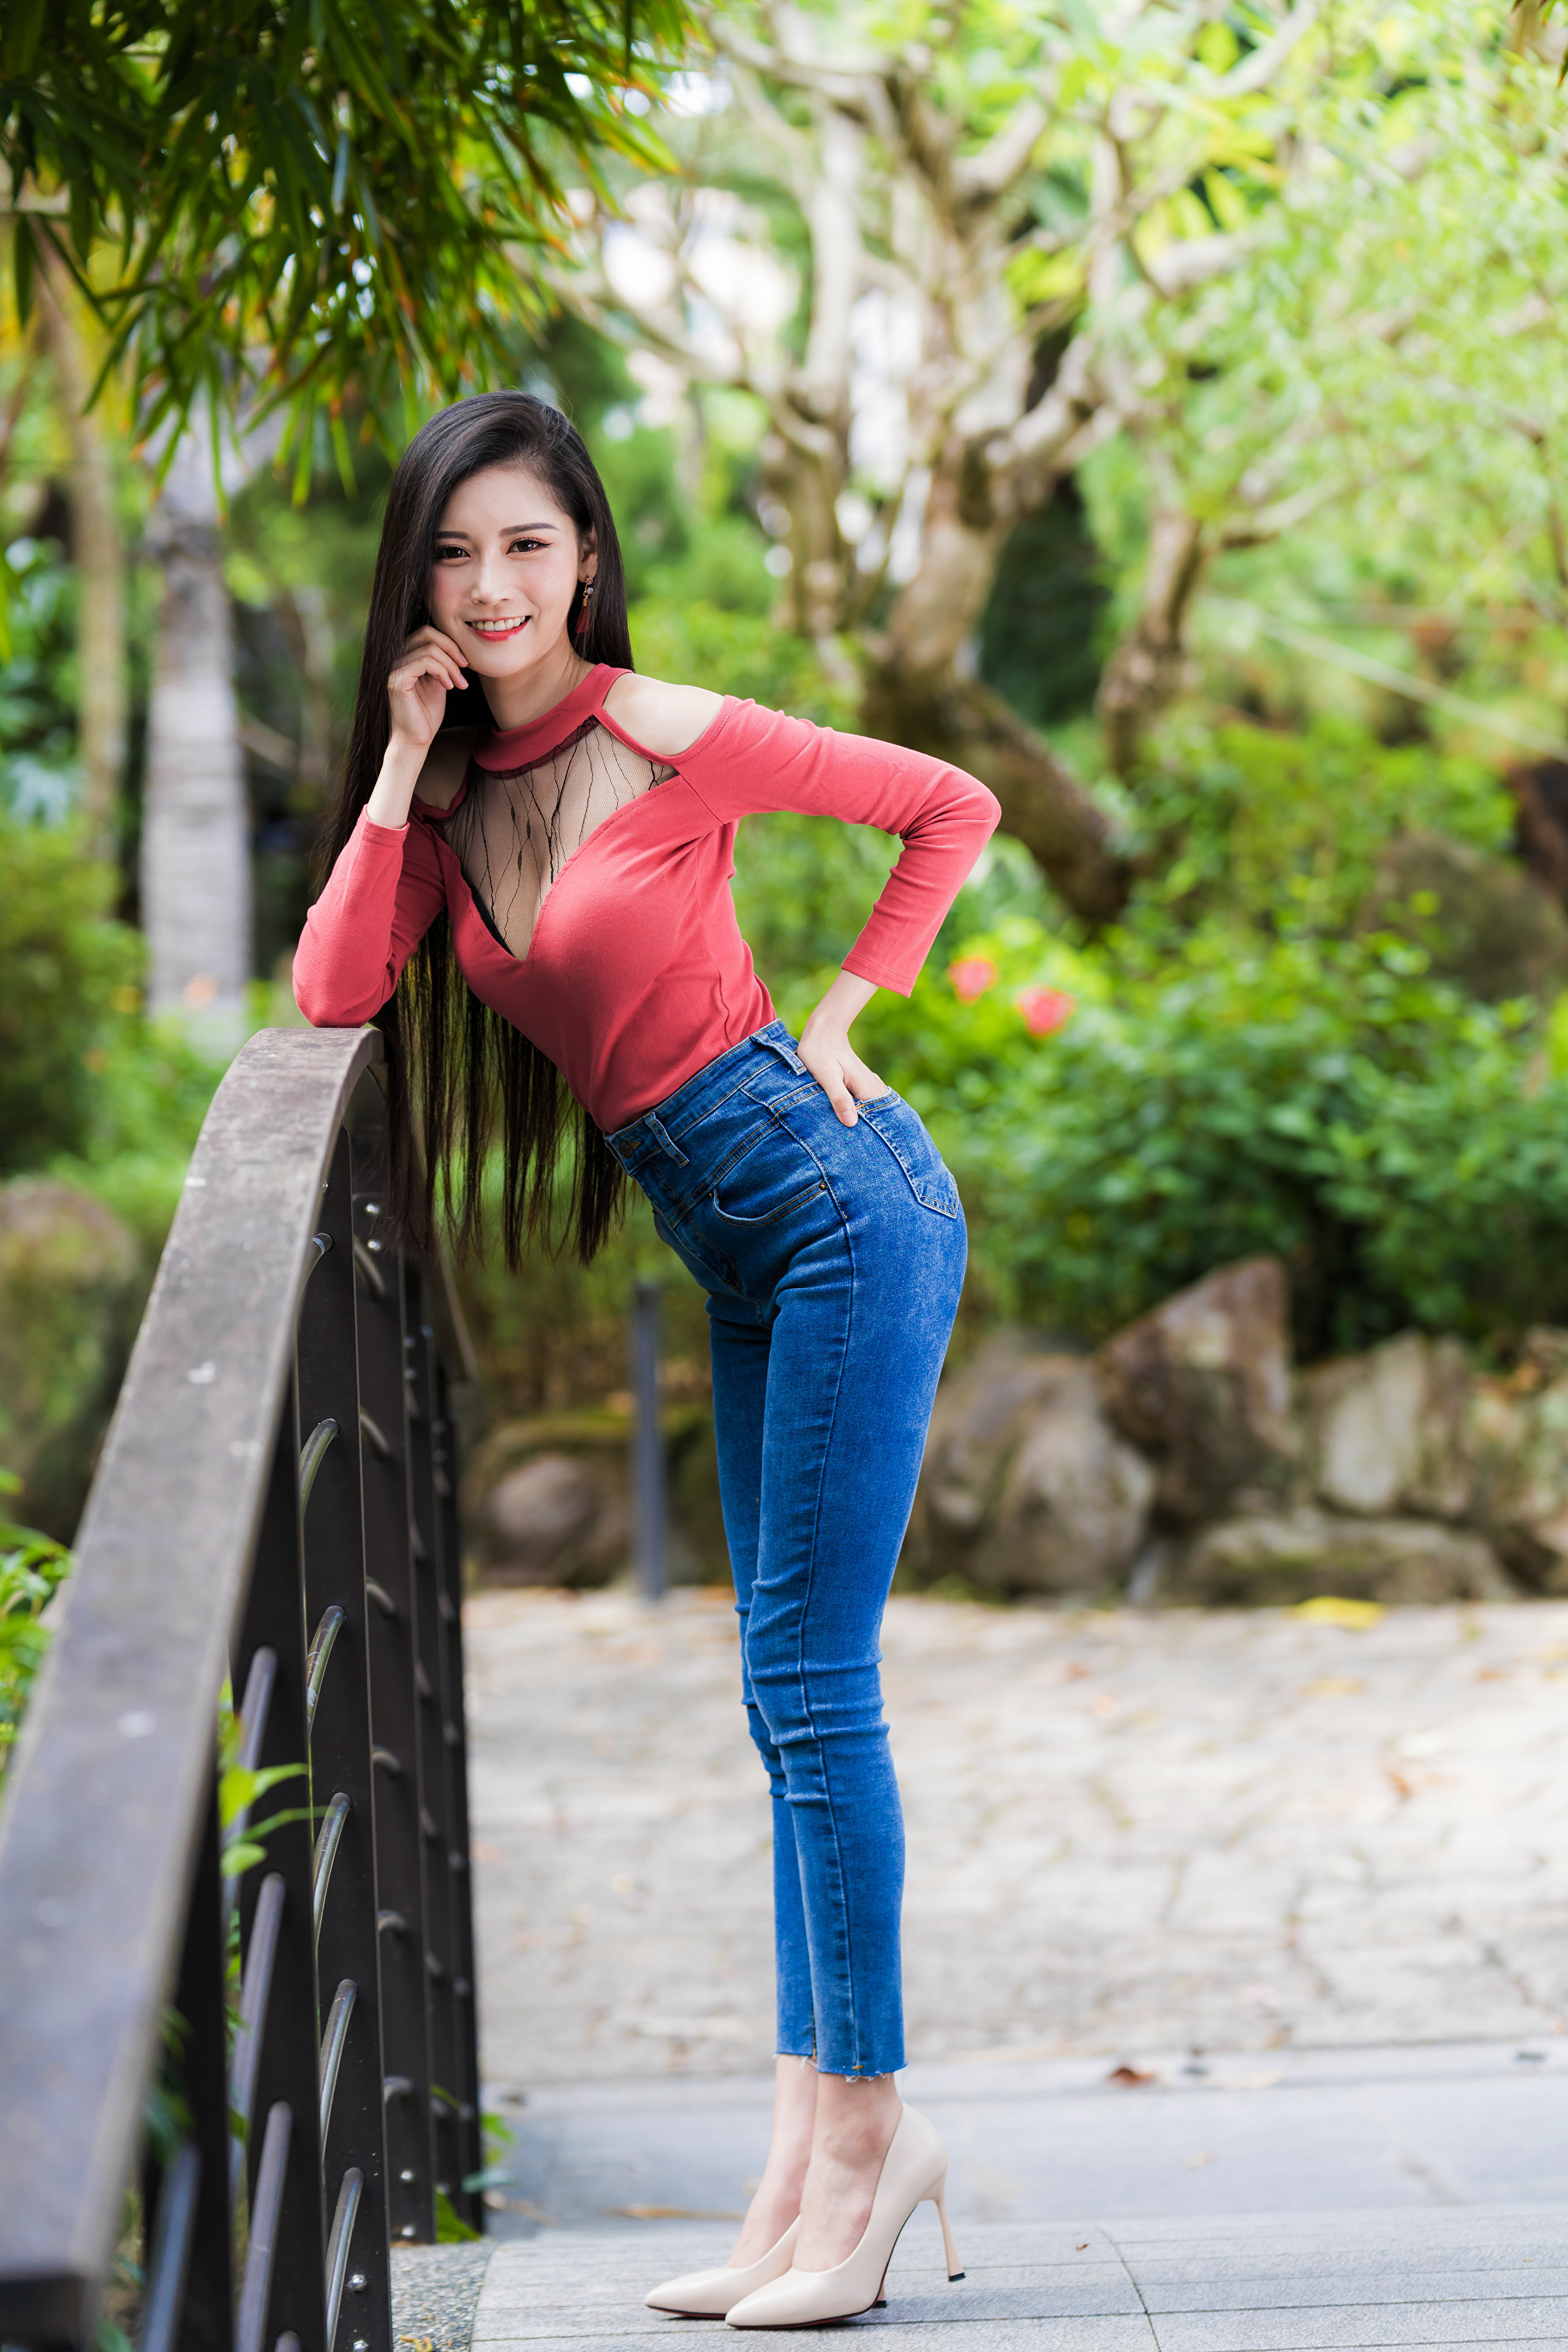 Asian Model Women Long Hair Dark Hair Jeans Red Shirt Leaning Railings Bushes Trees Depth Of Field W 2560x3840